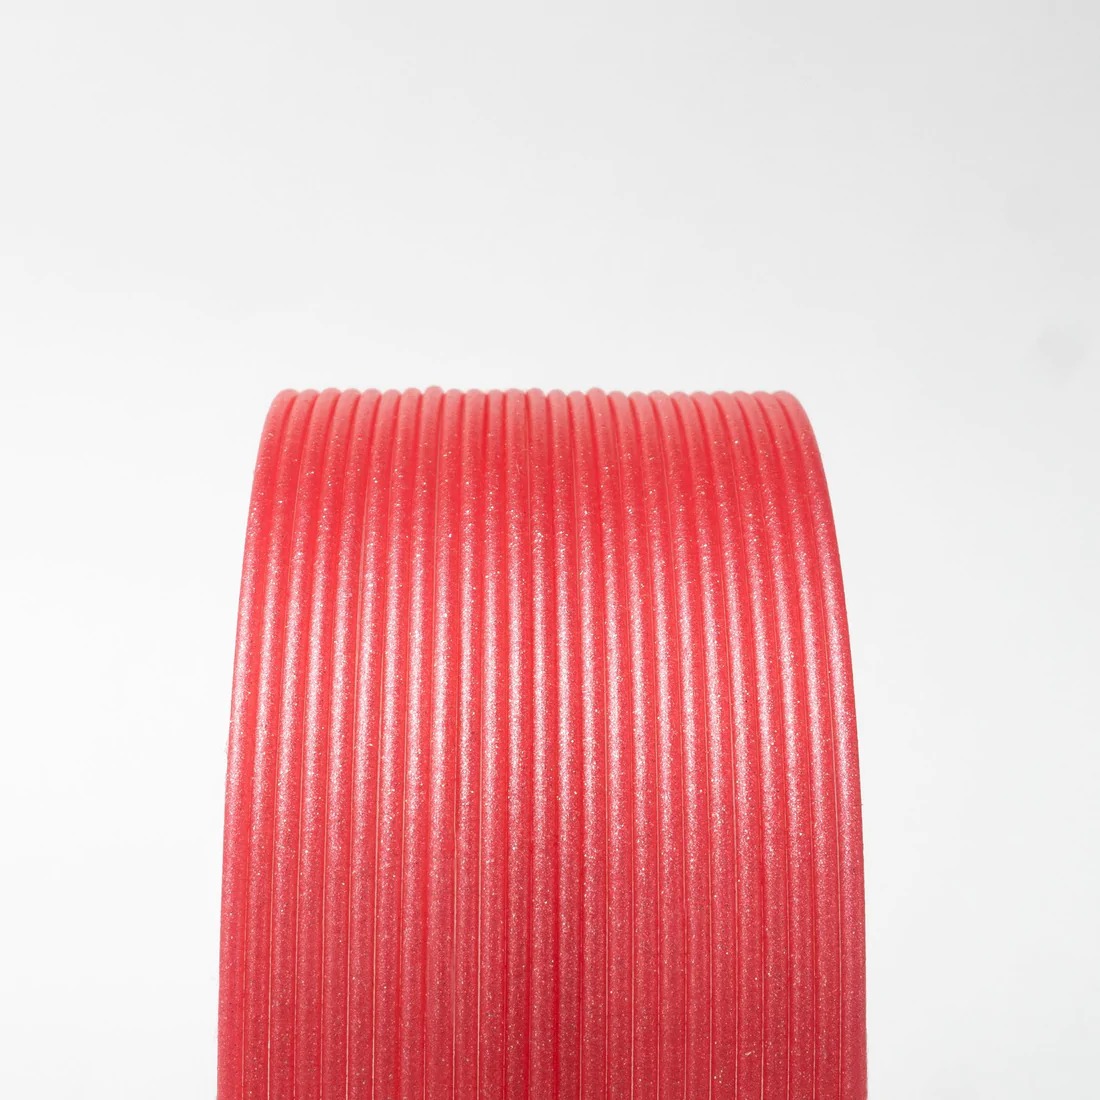 Cupid's Crush Metallic Pink HTPLA  1.75mm 3D printing filament